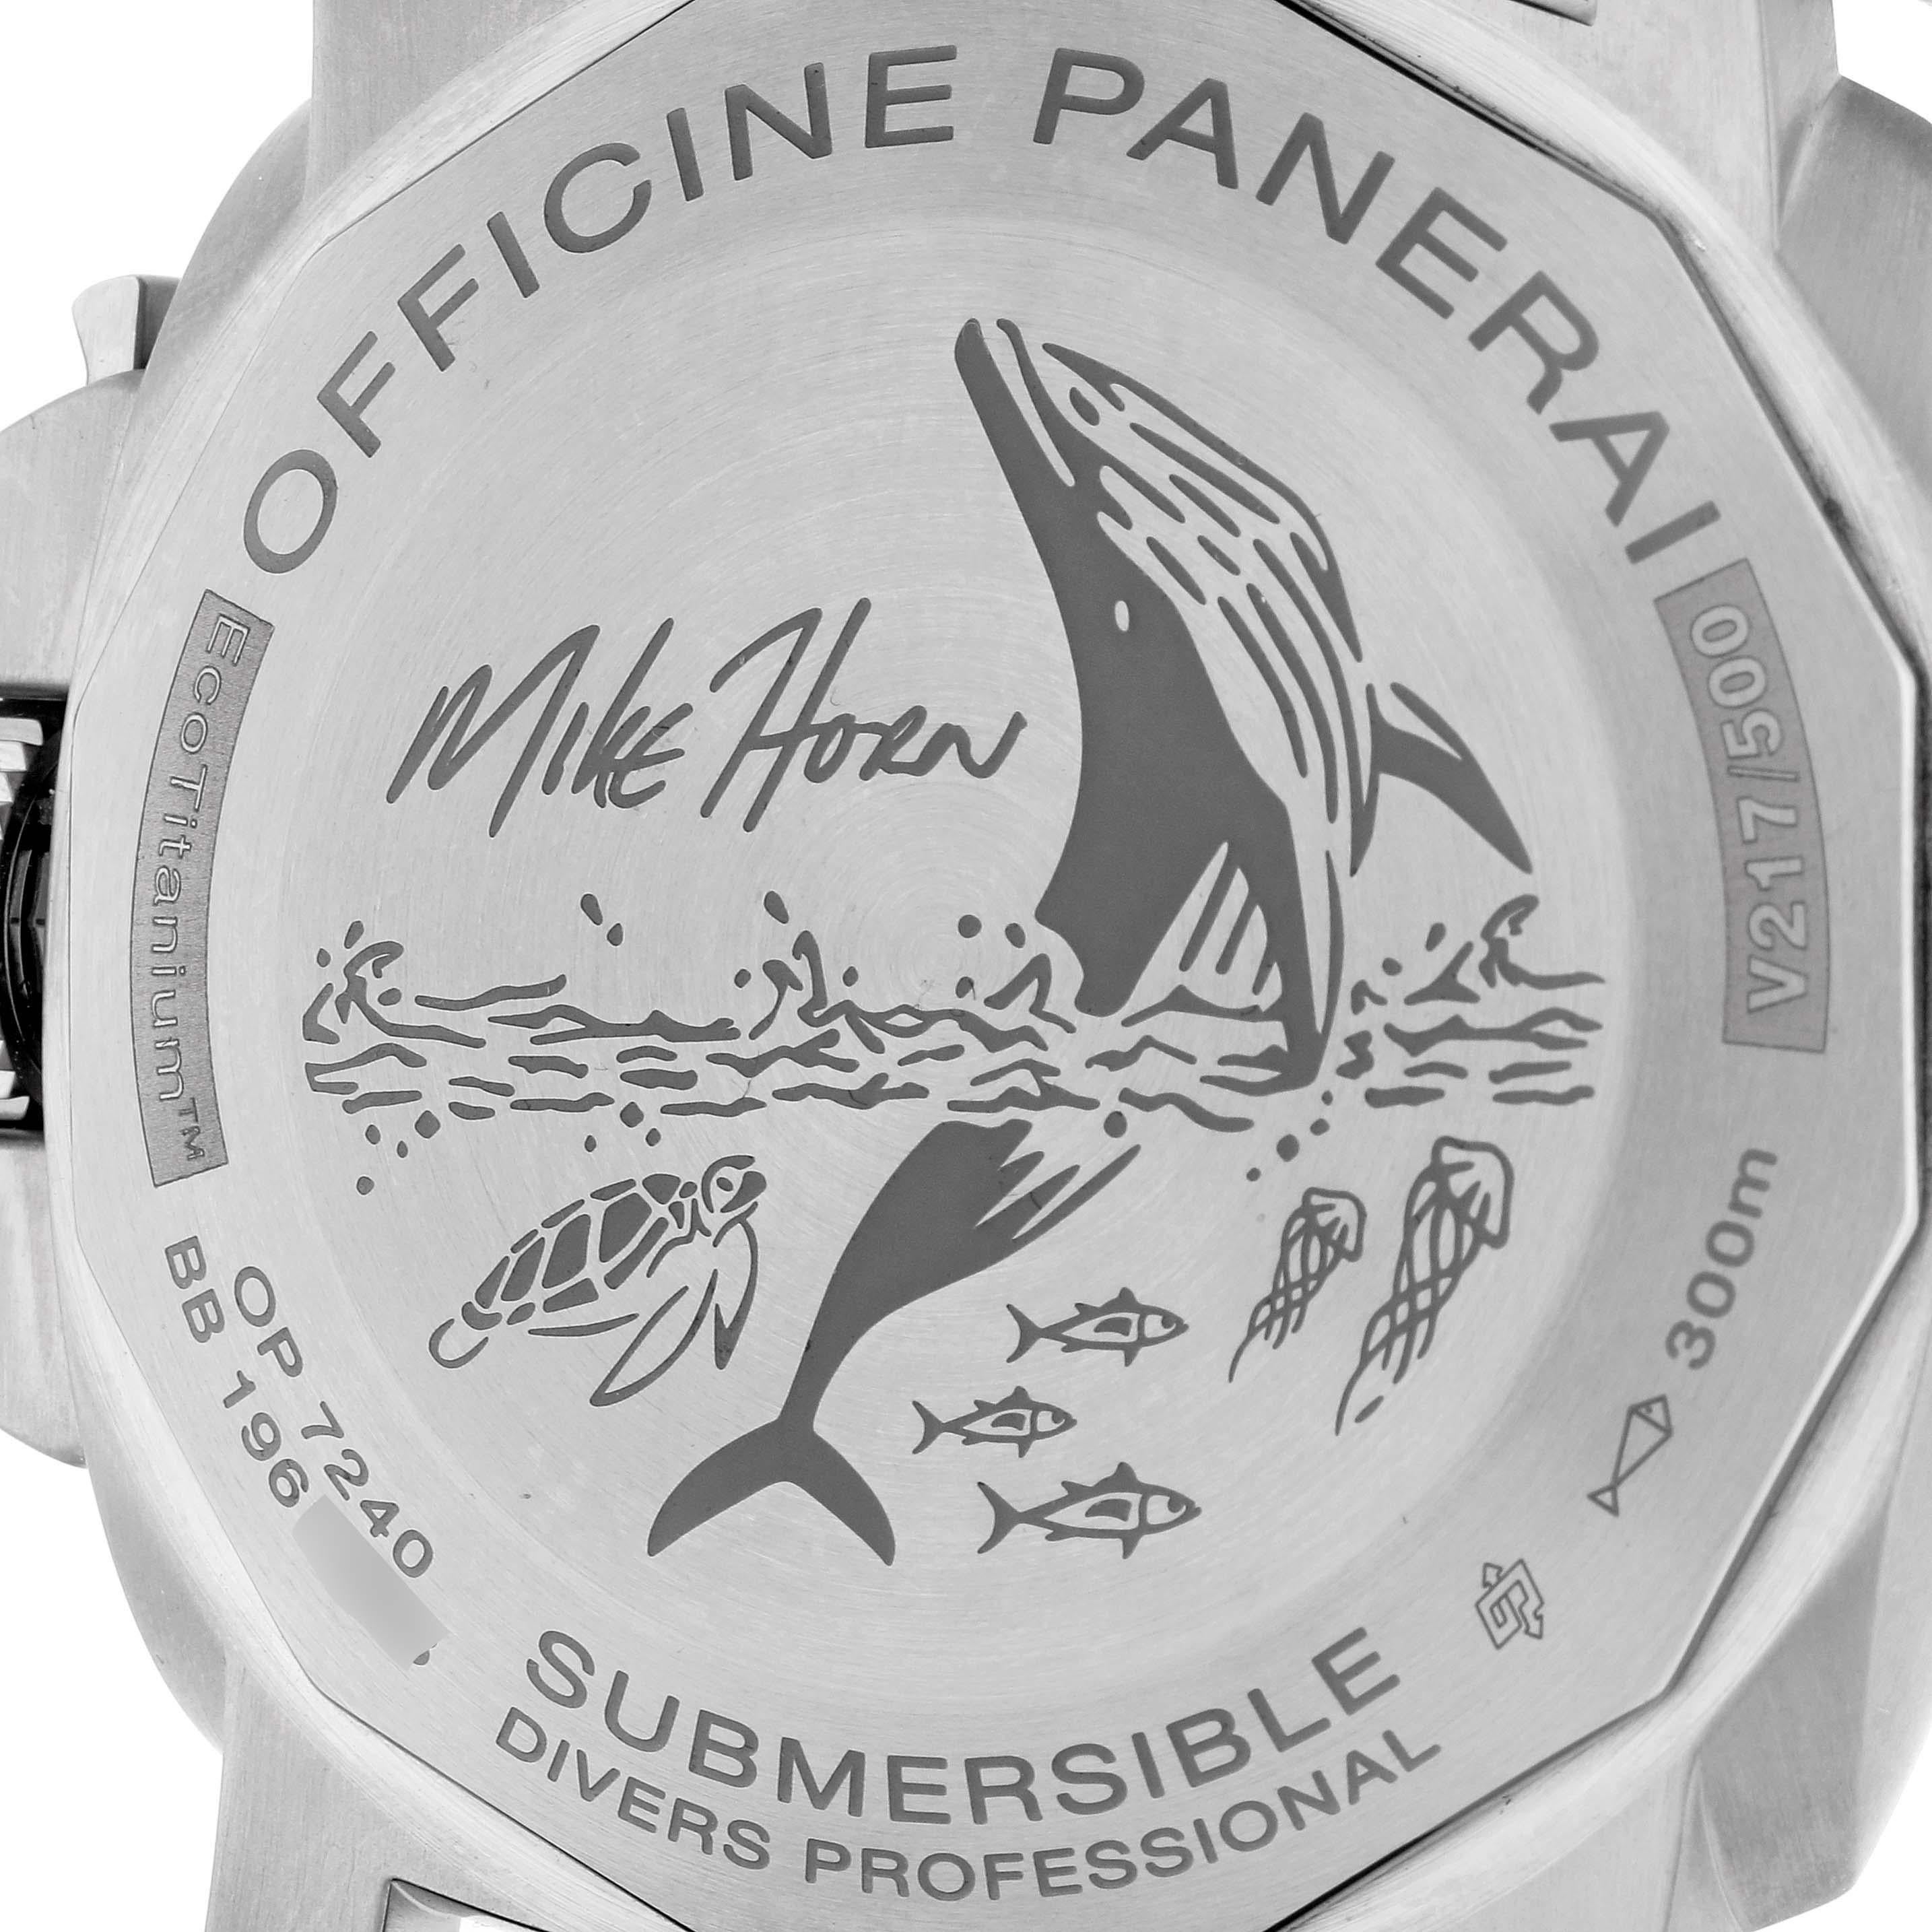 Panerai Submersible Mike Horn Edition Titanium Mens Watch PAM00984 Box Card For Sale 2